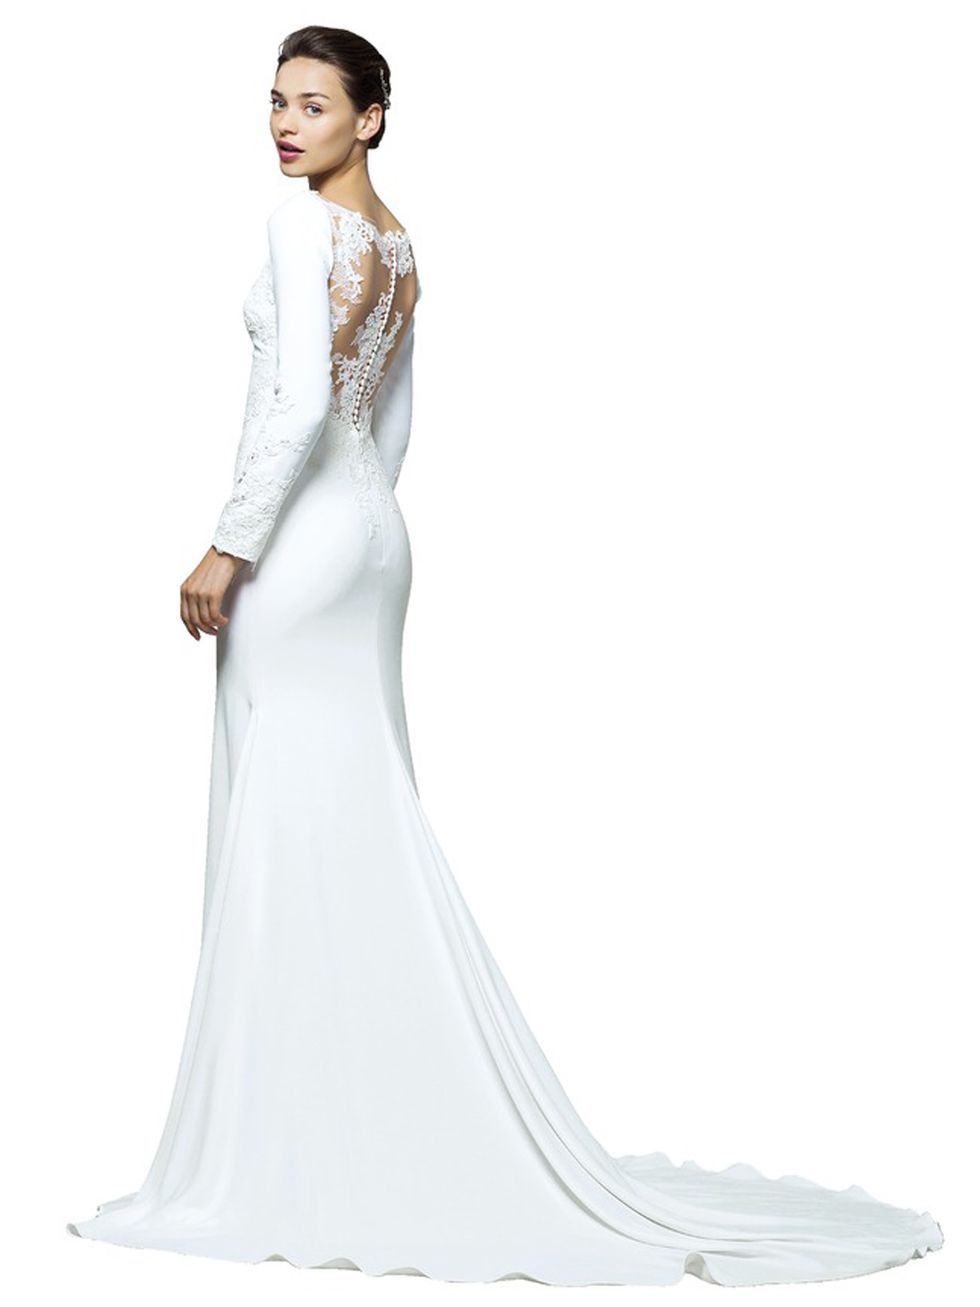 Gown, Dress, Clothing, Fashion model, Wedding dress, Shoulder, Bride, Bridal clothing, A-line, Formal wear, 